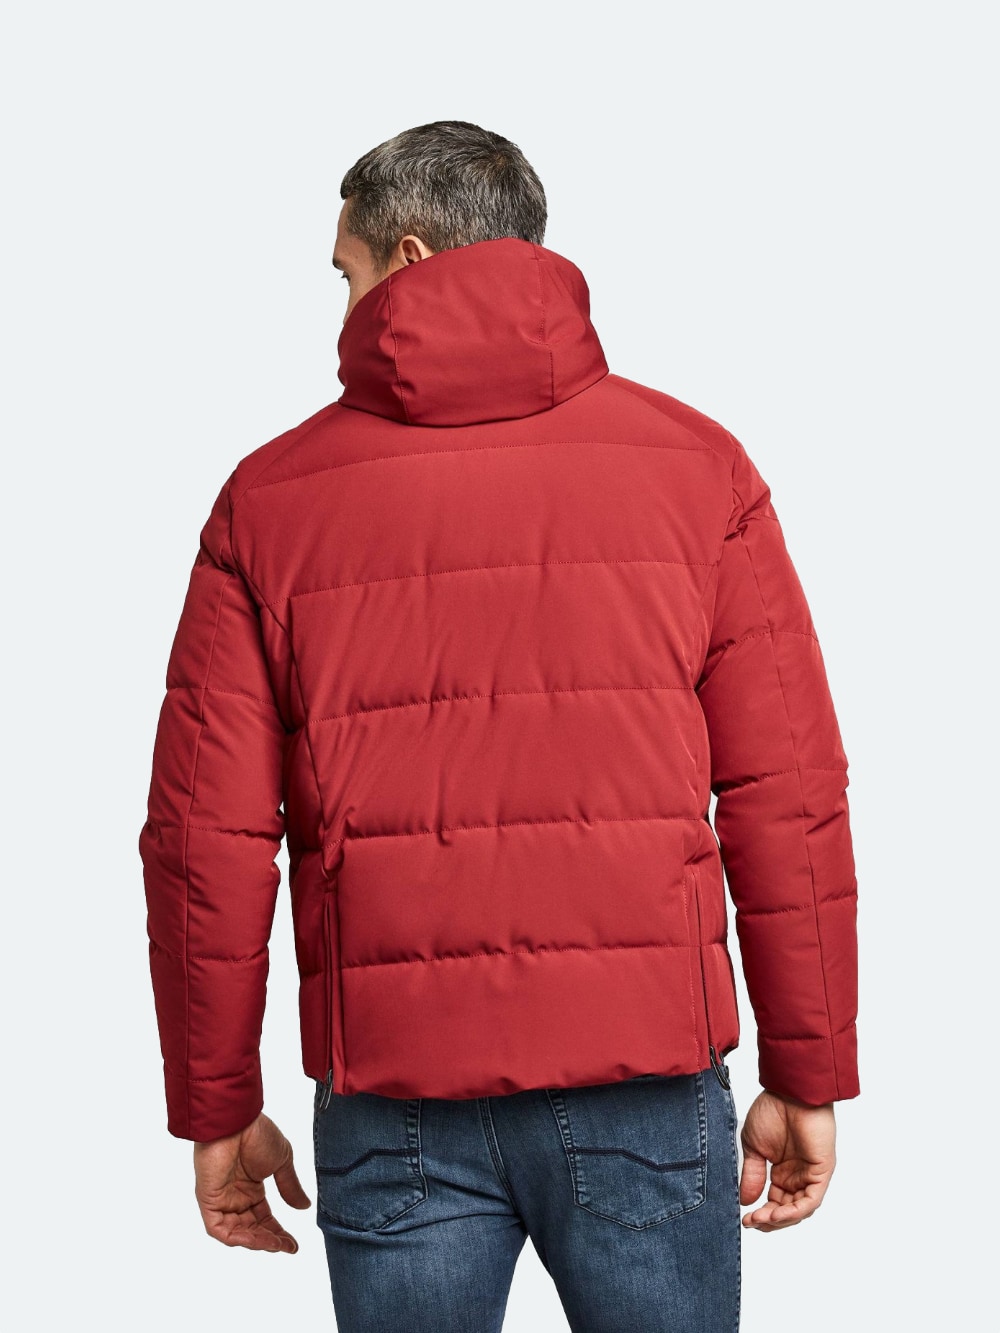 Flexcity Hooded Jacket - Red